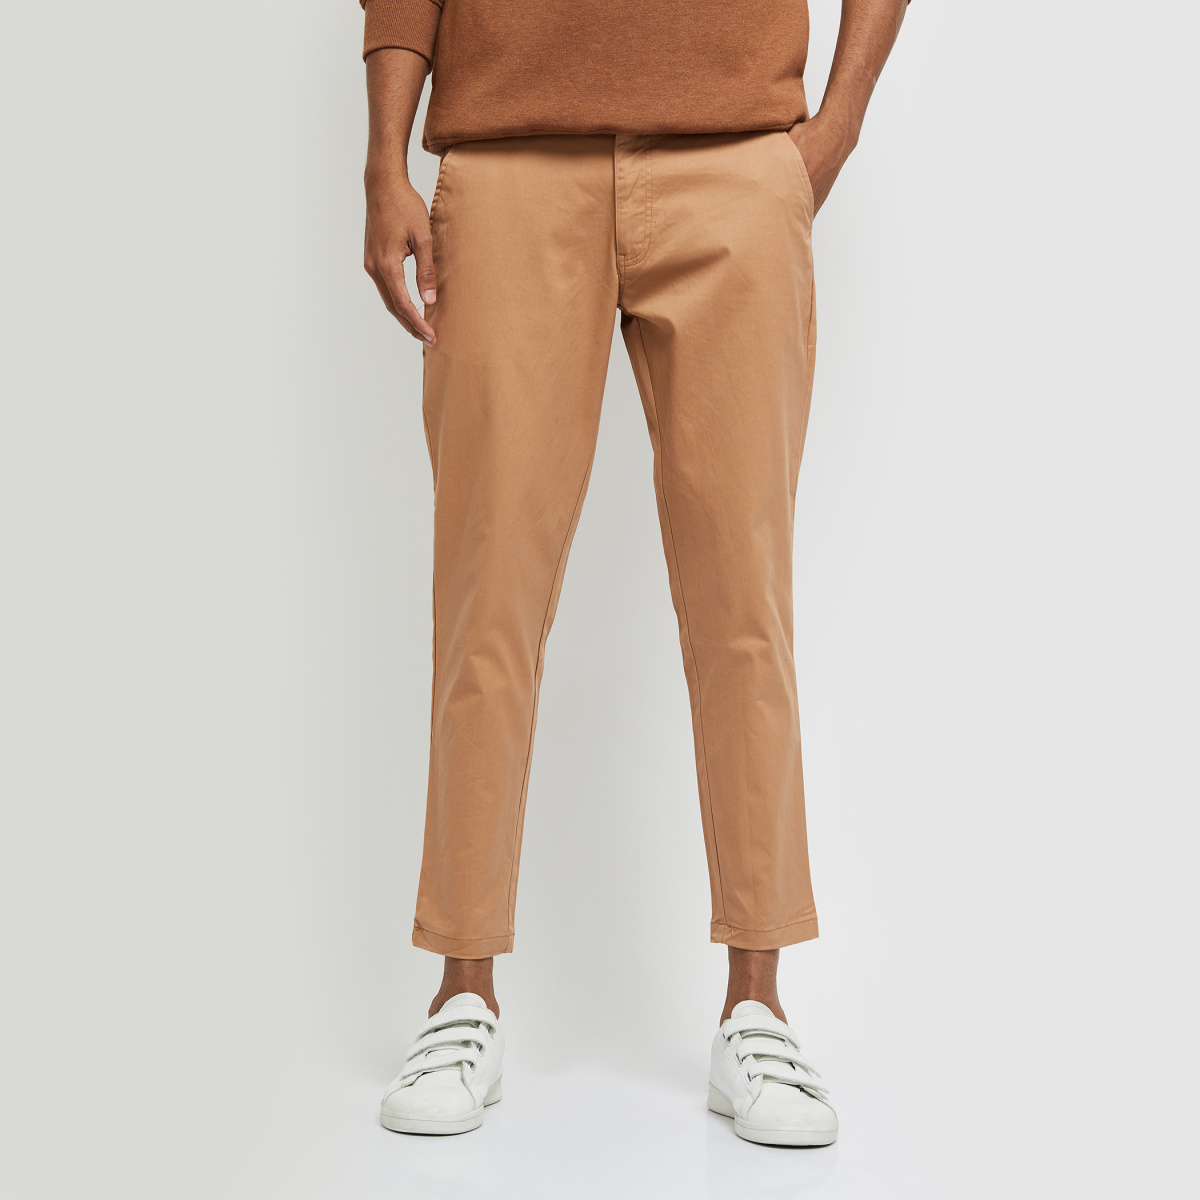 Slim Fit Cropped cotton chinos - Khaki beige - Men | H&M IN